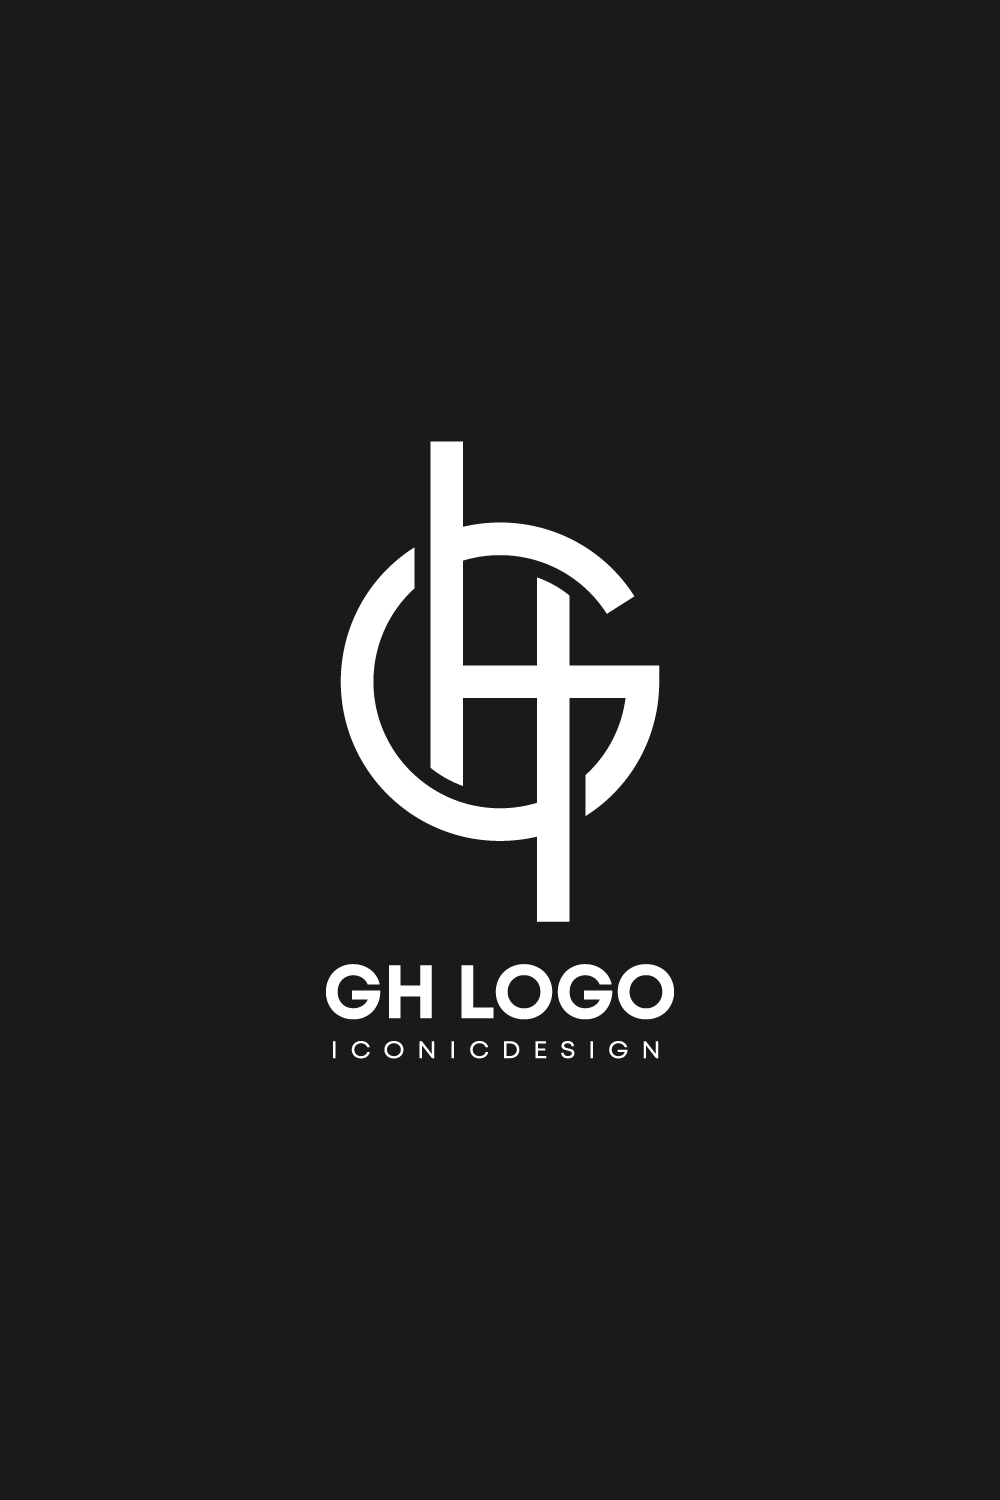 GH logo pinterest preview image.